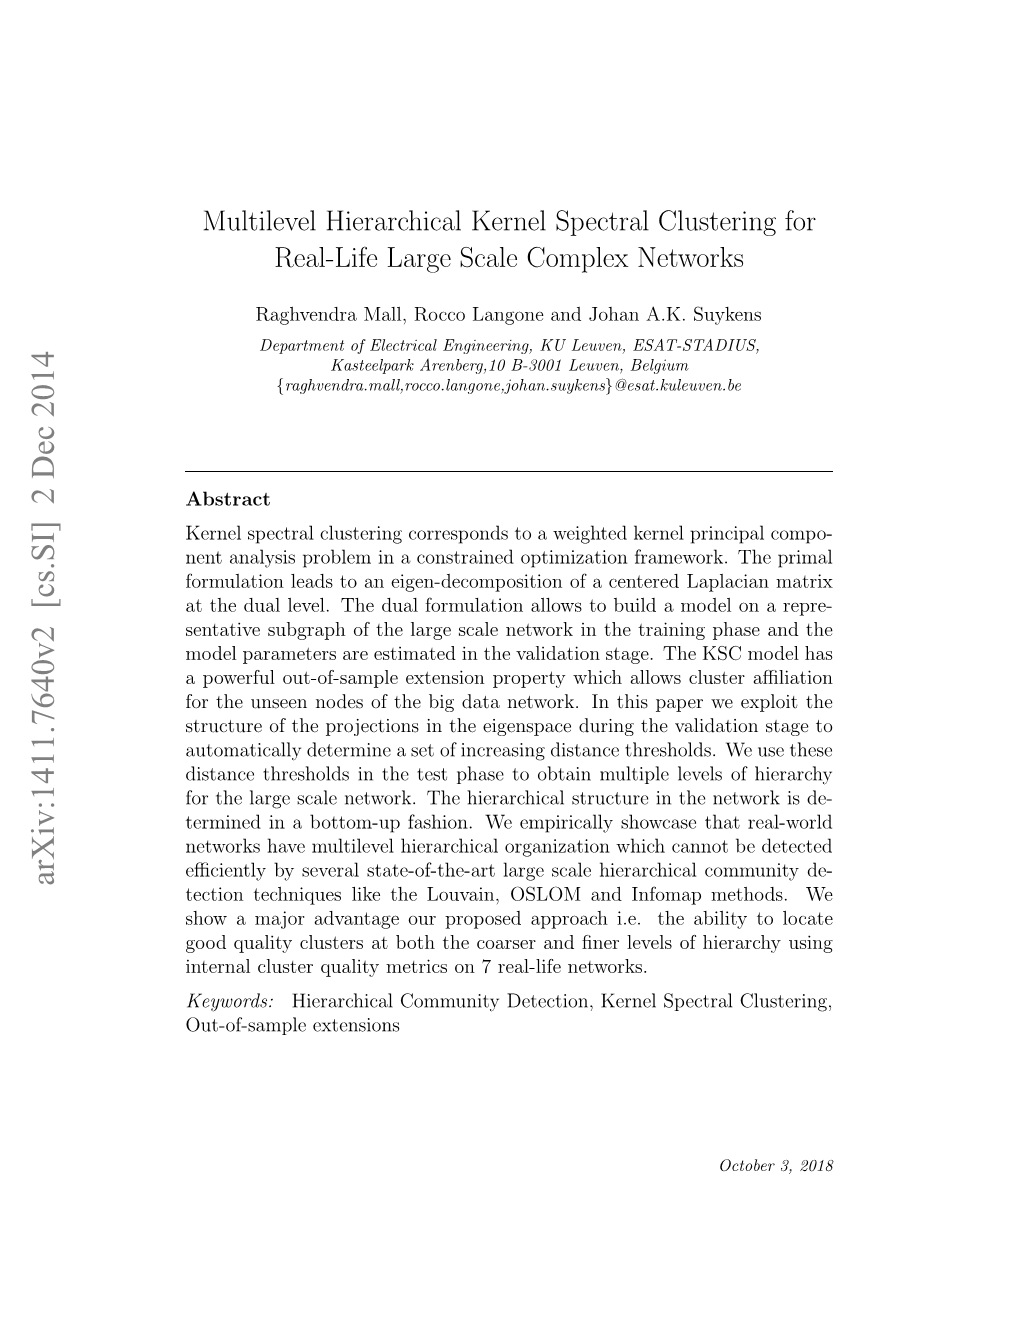 Multilevel Hierarchical Kernel Spectral Clustering for Real-Life Large